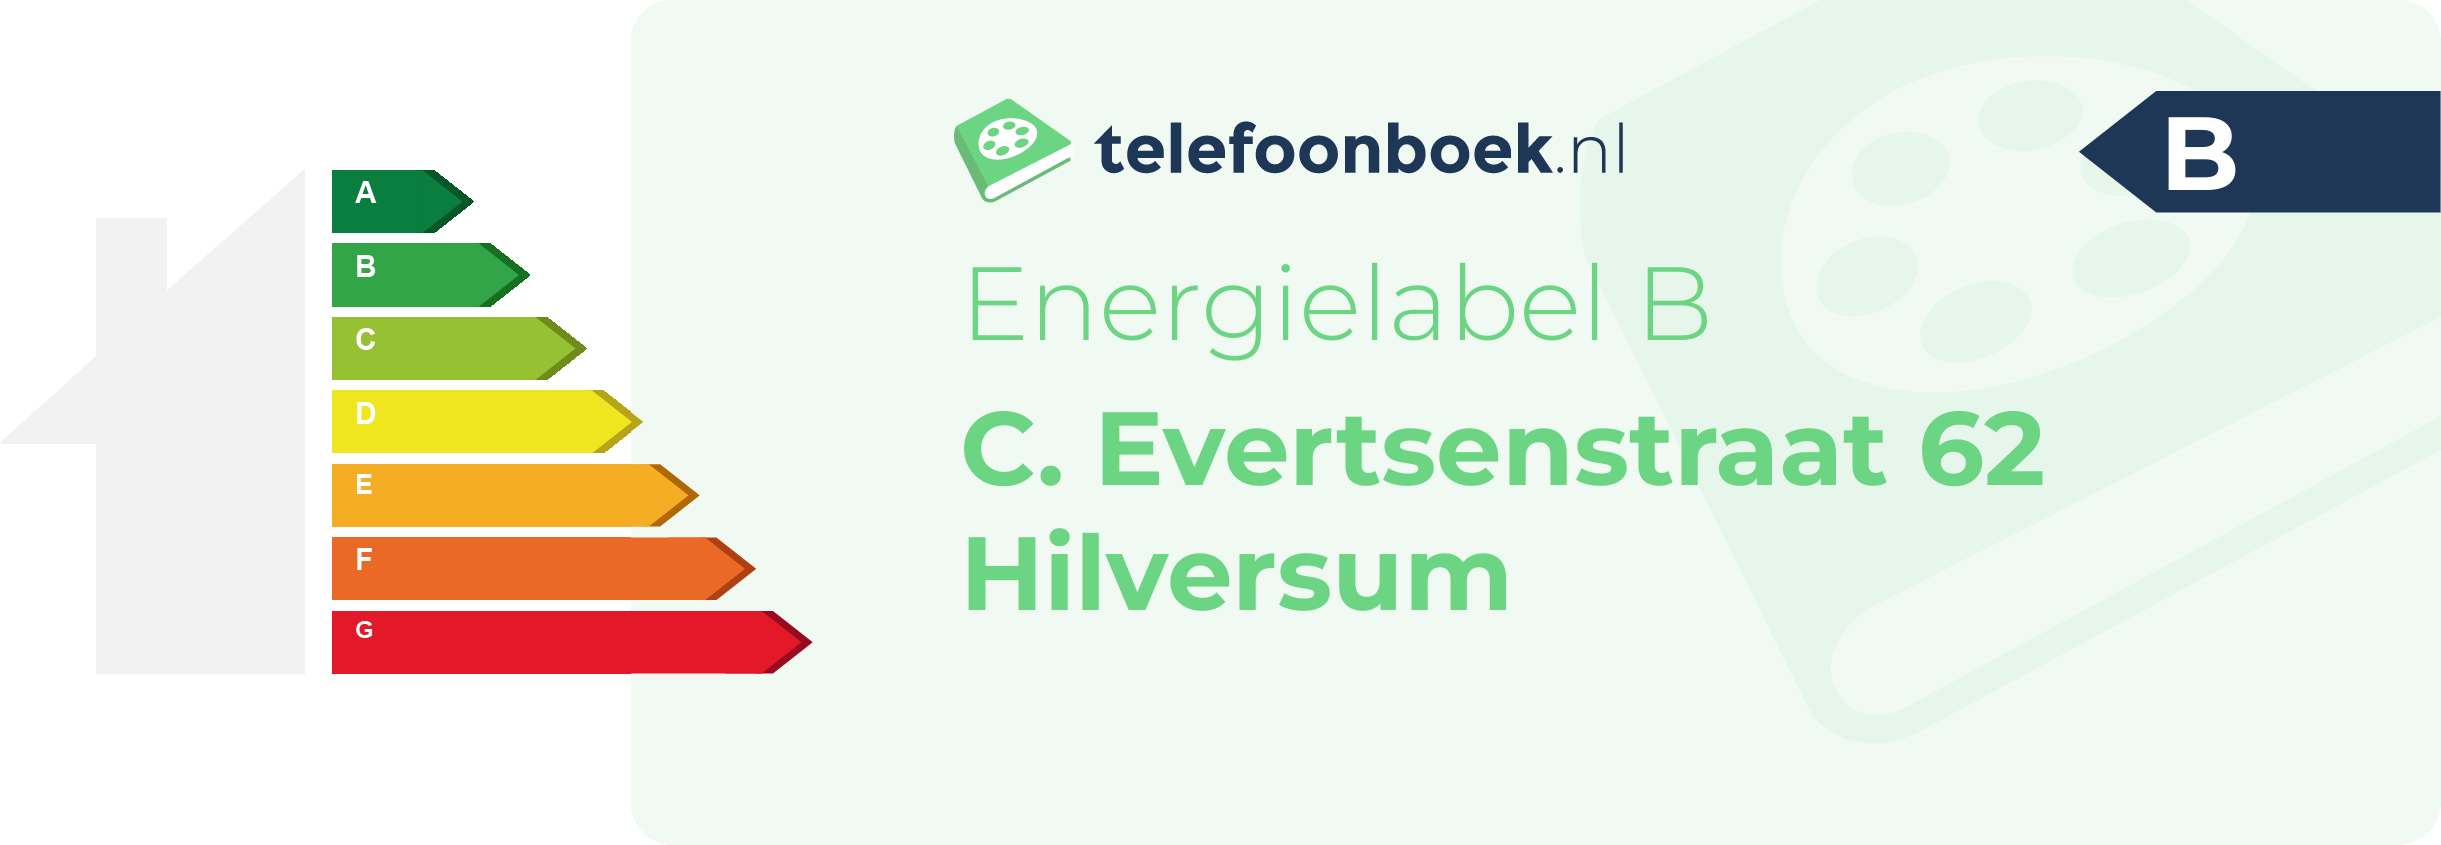 Energielabel C. Evertsenstraat 62 Hilversum